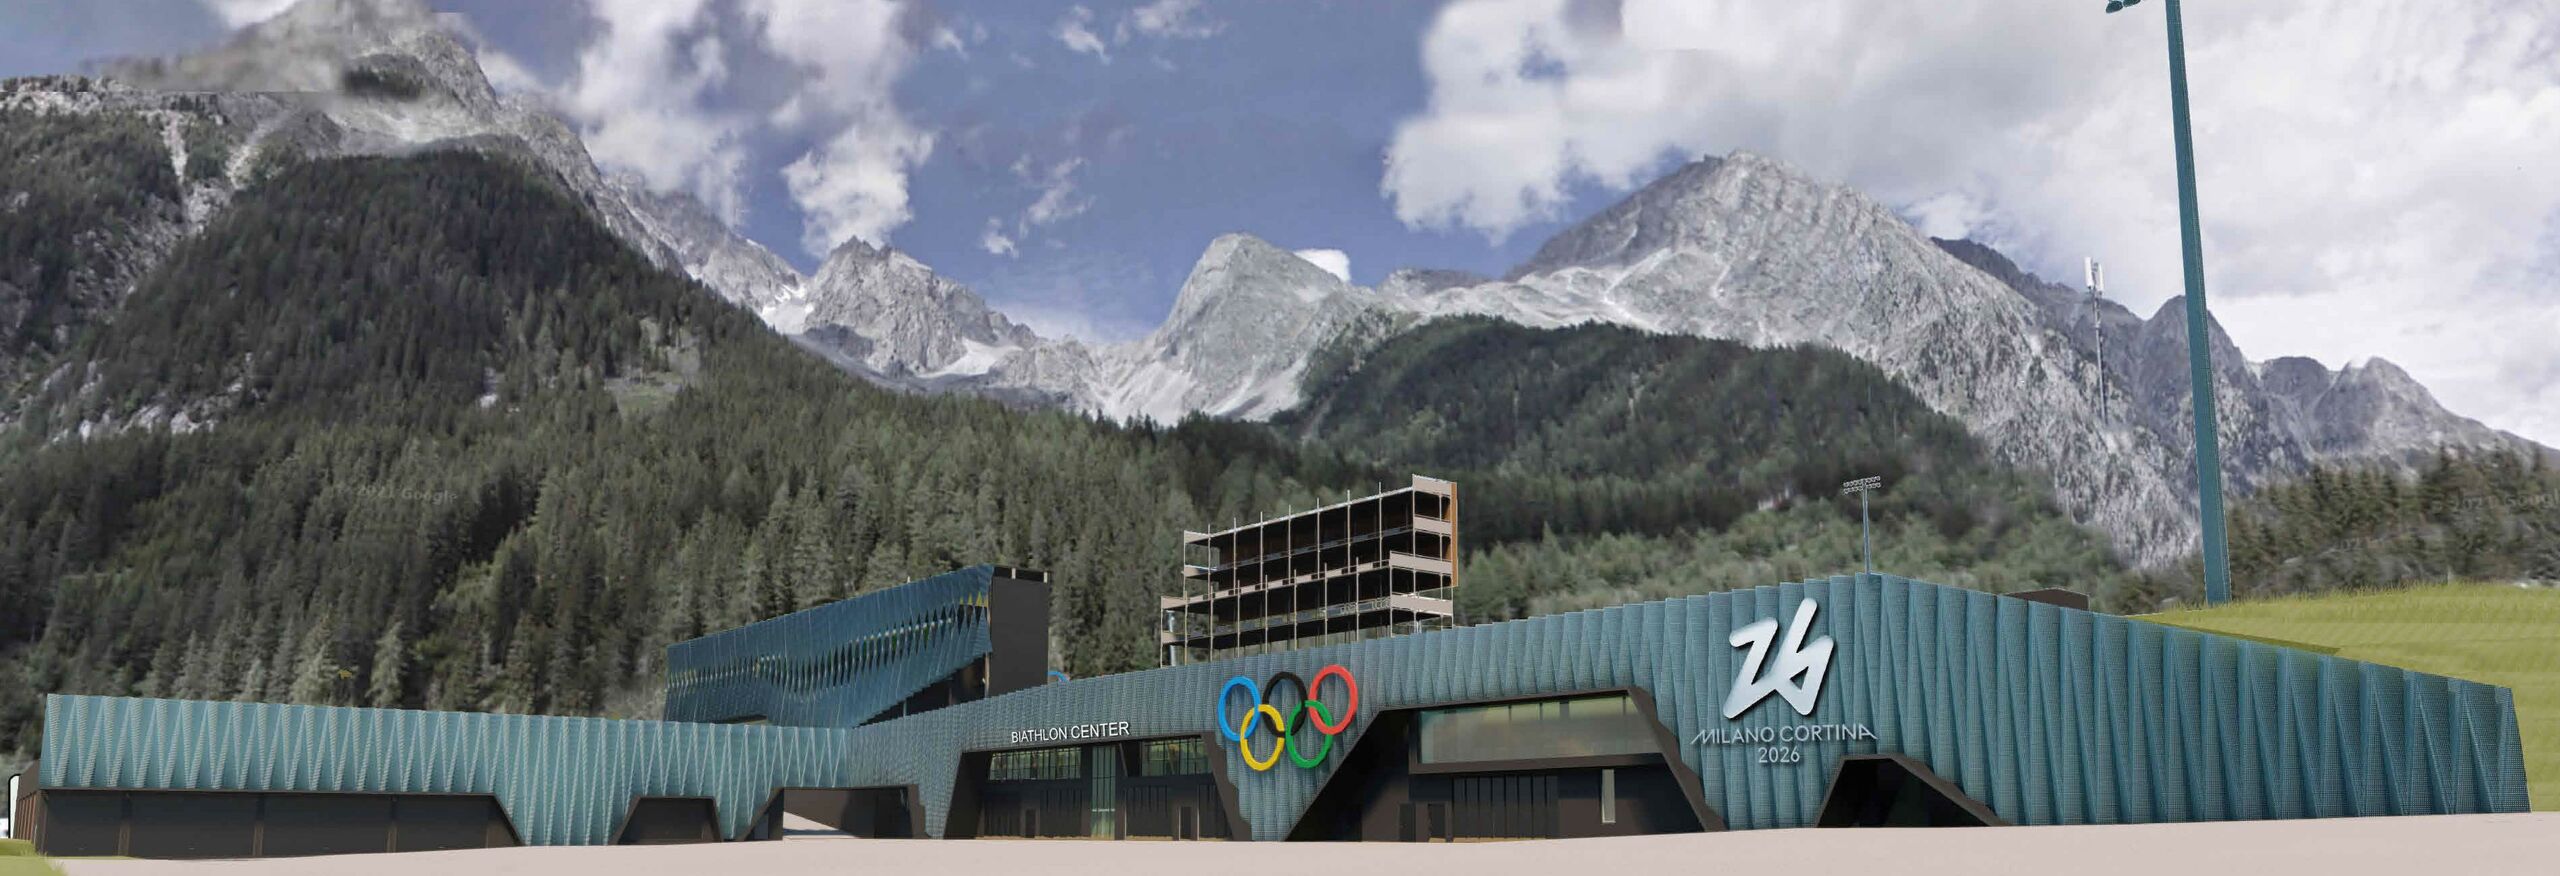 Olympia 2026 - Biathlonzentrum